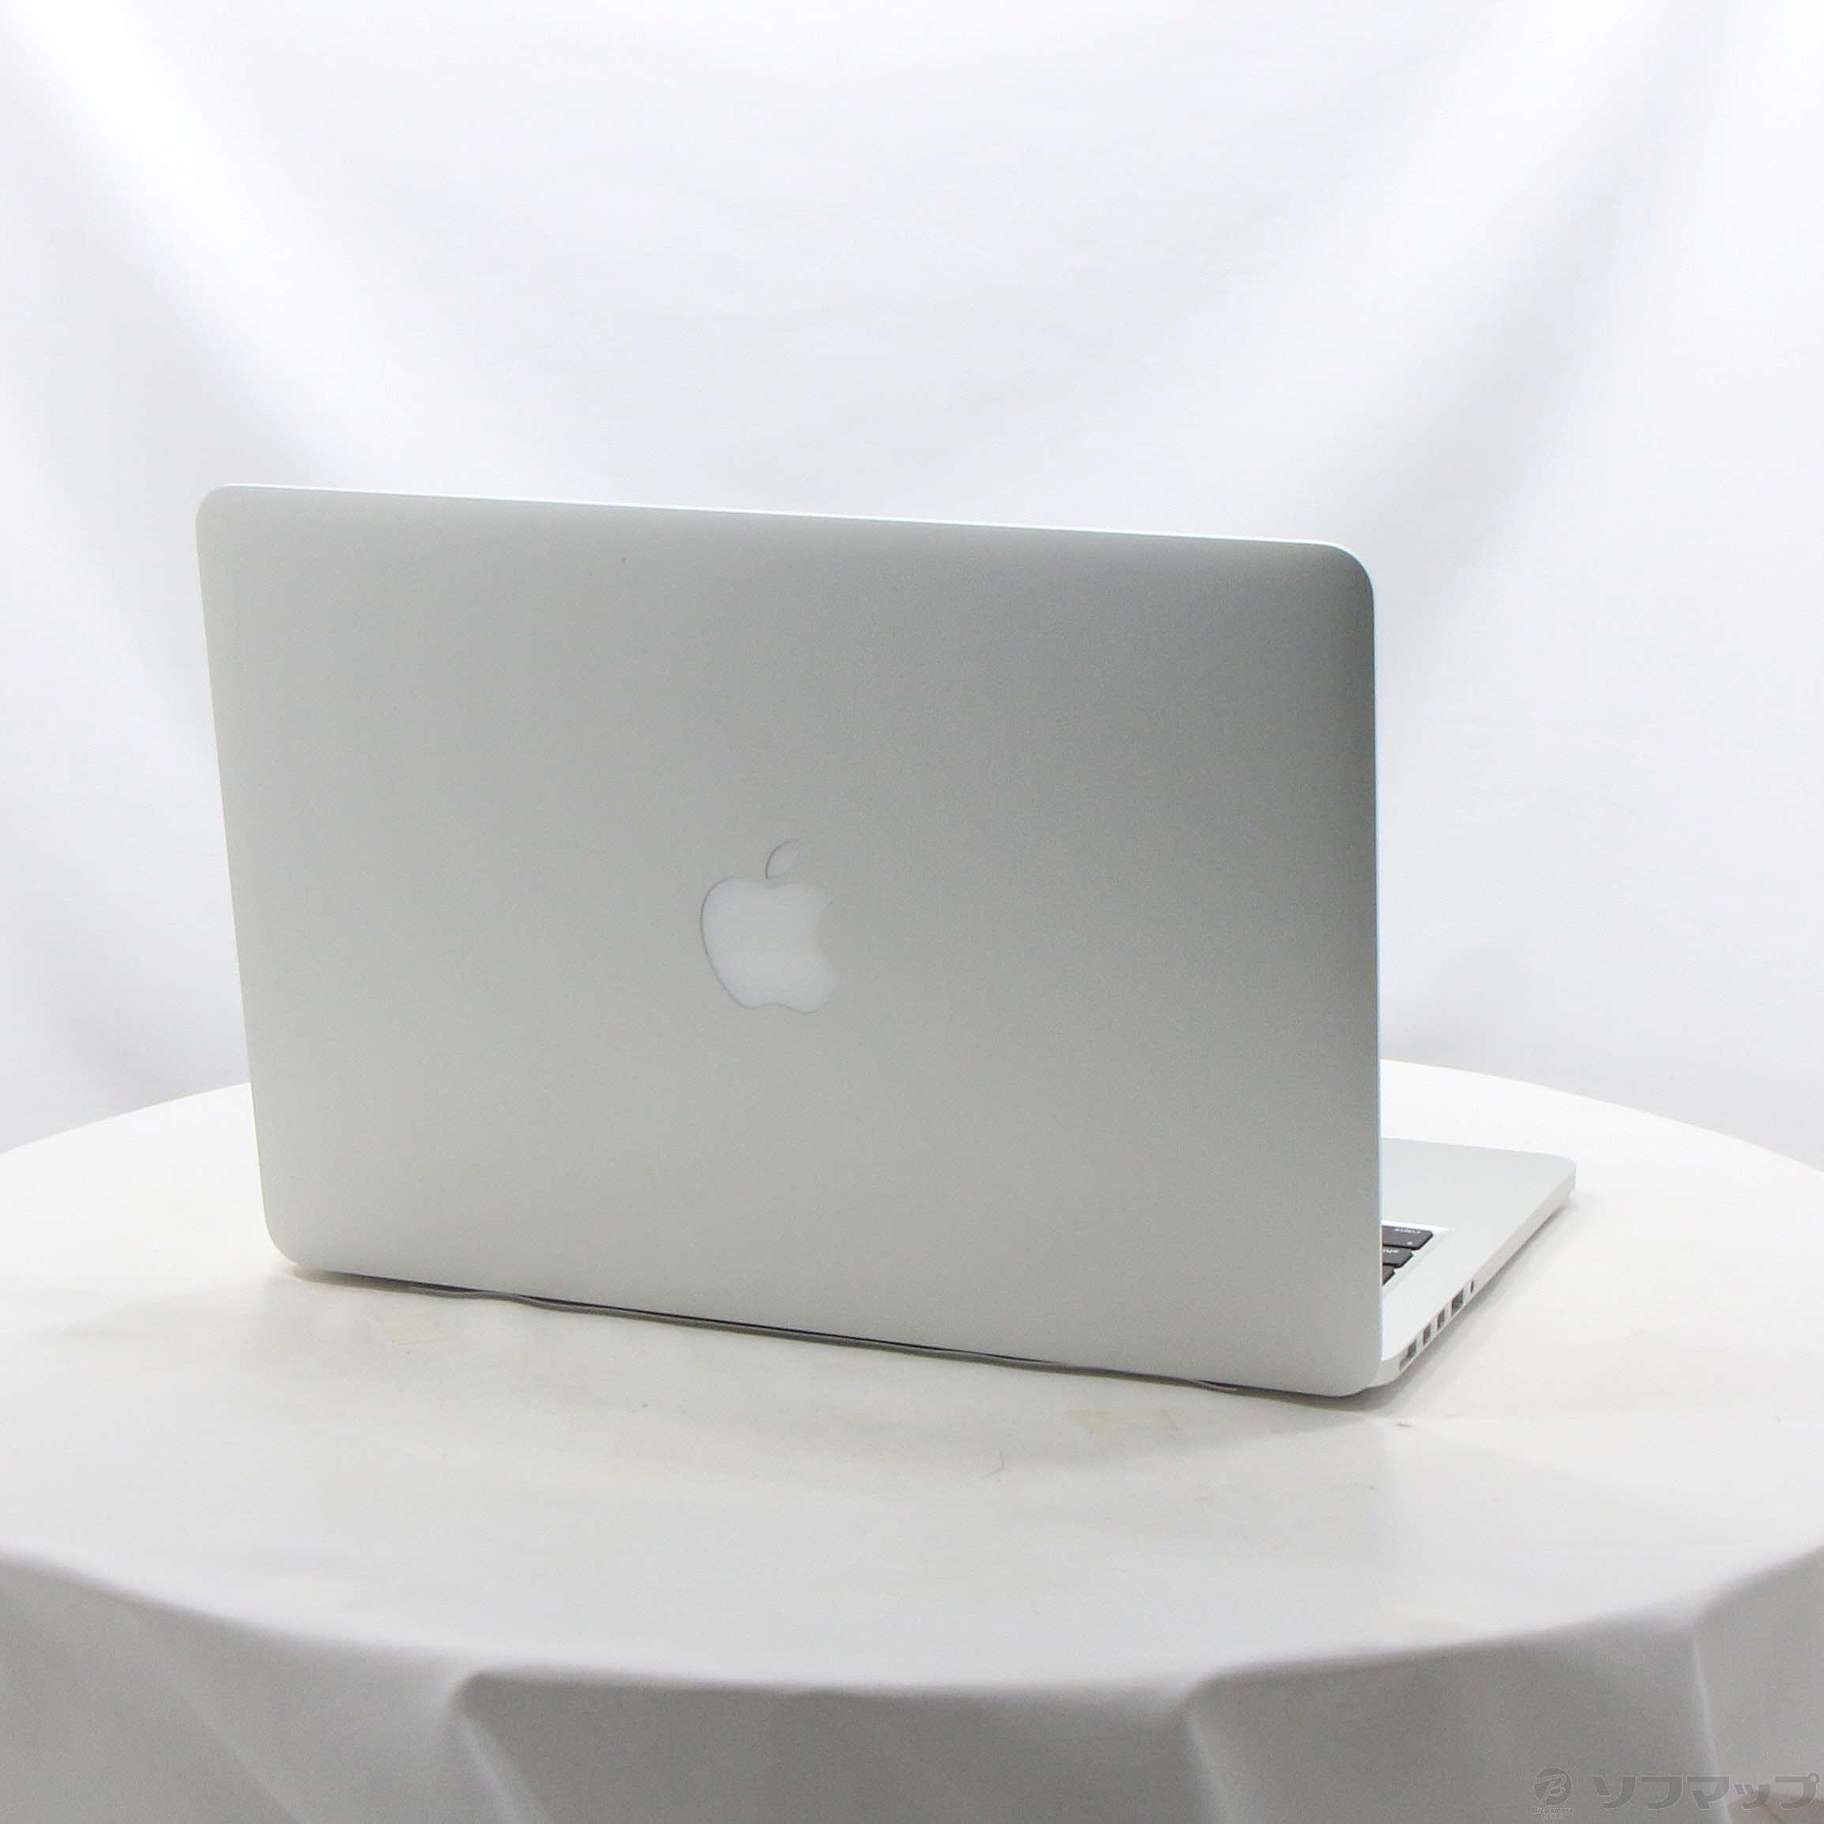 【期間限定セール】APPLE MacBook Pro MGX72J/A